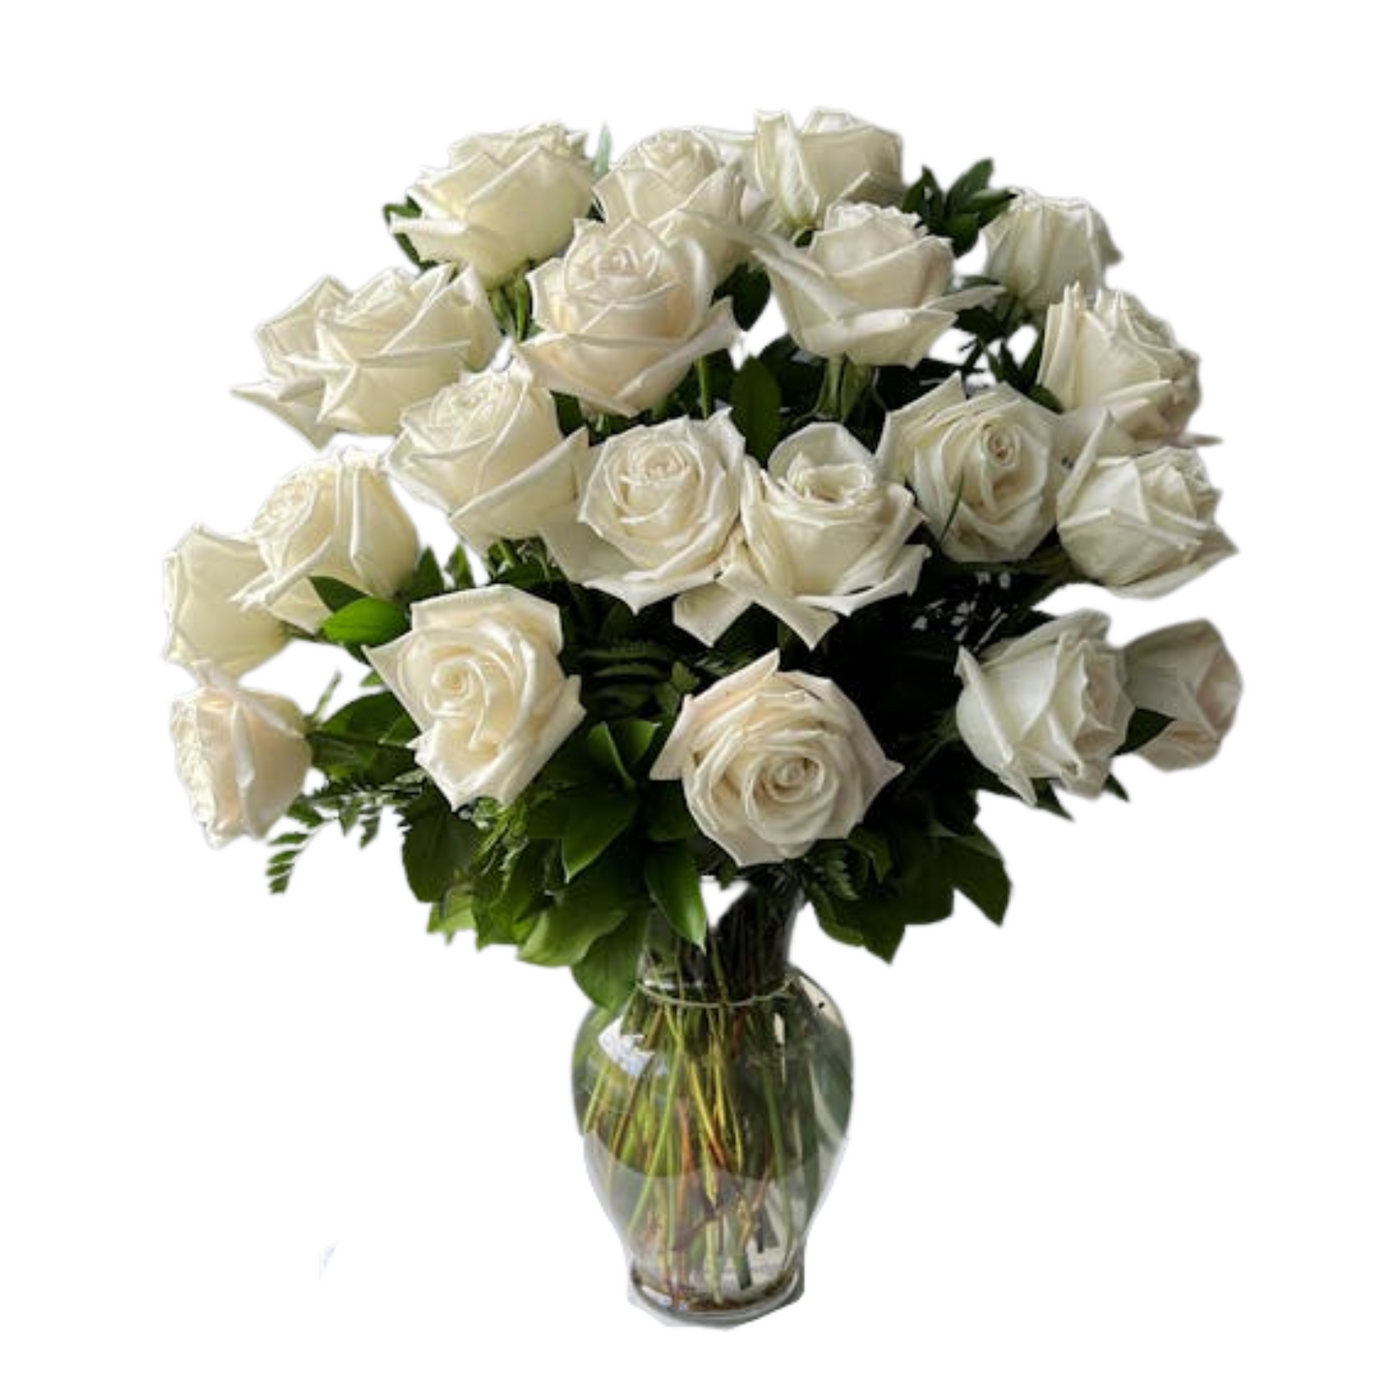 2 Dozen Classic Ivory White Roses